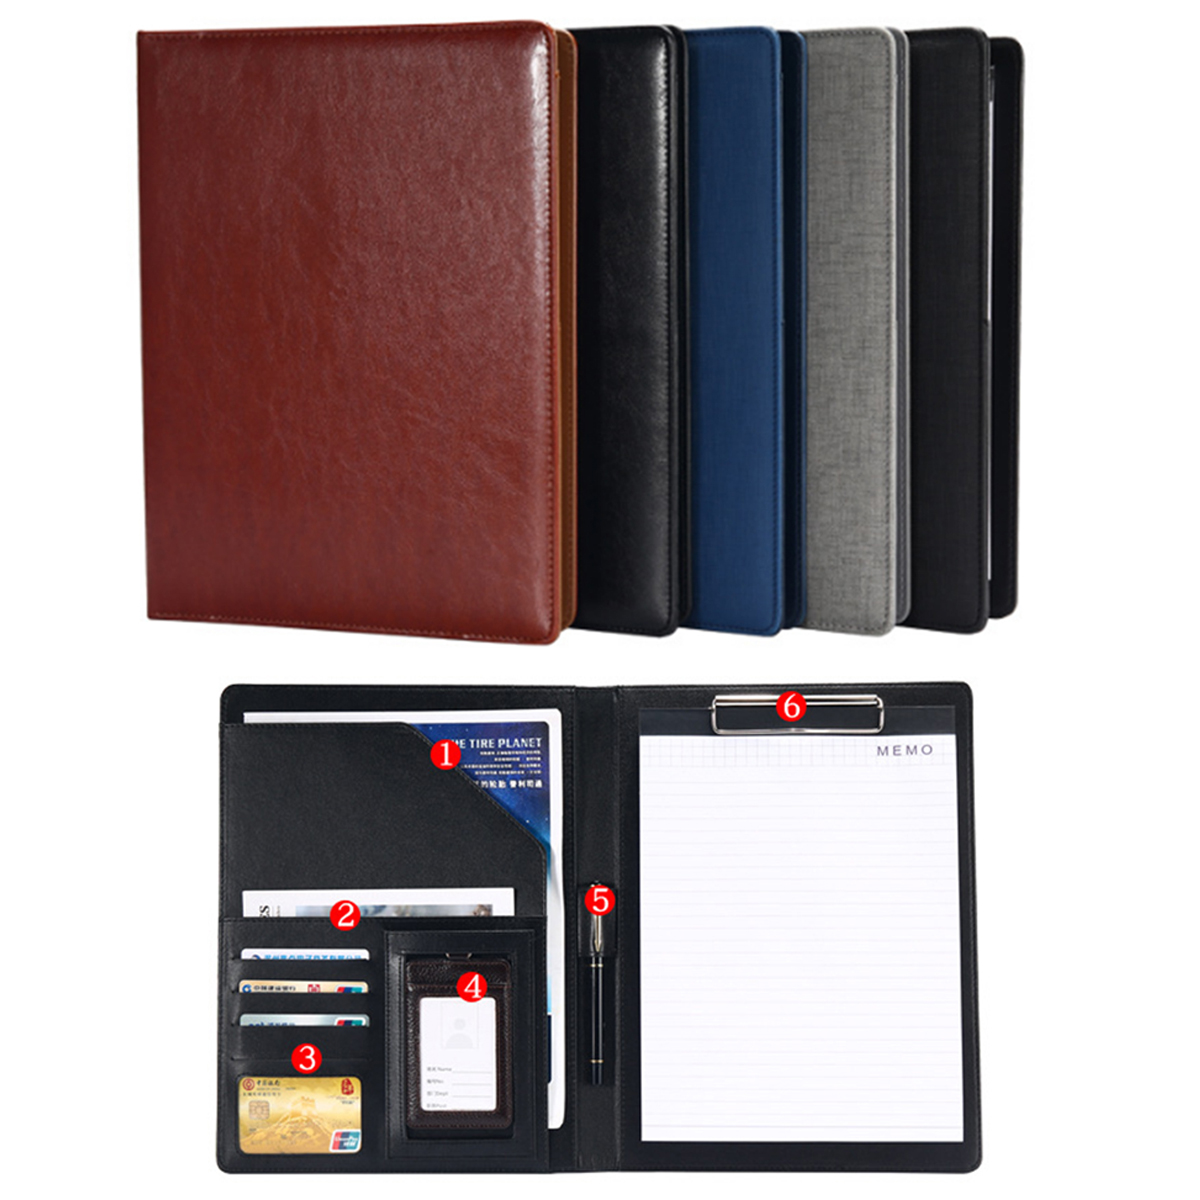 A4 Zipped Conference Folder Business PU Leather Document Case Portfolio Black 